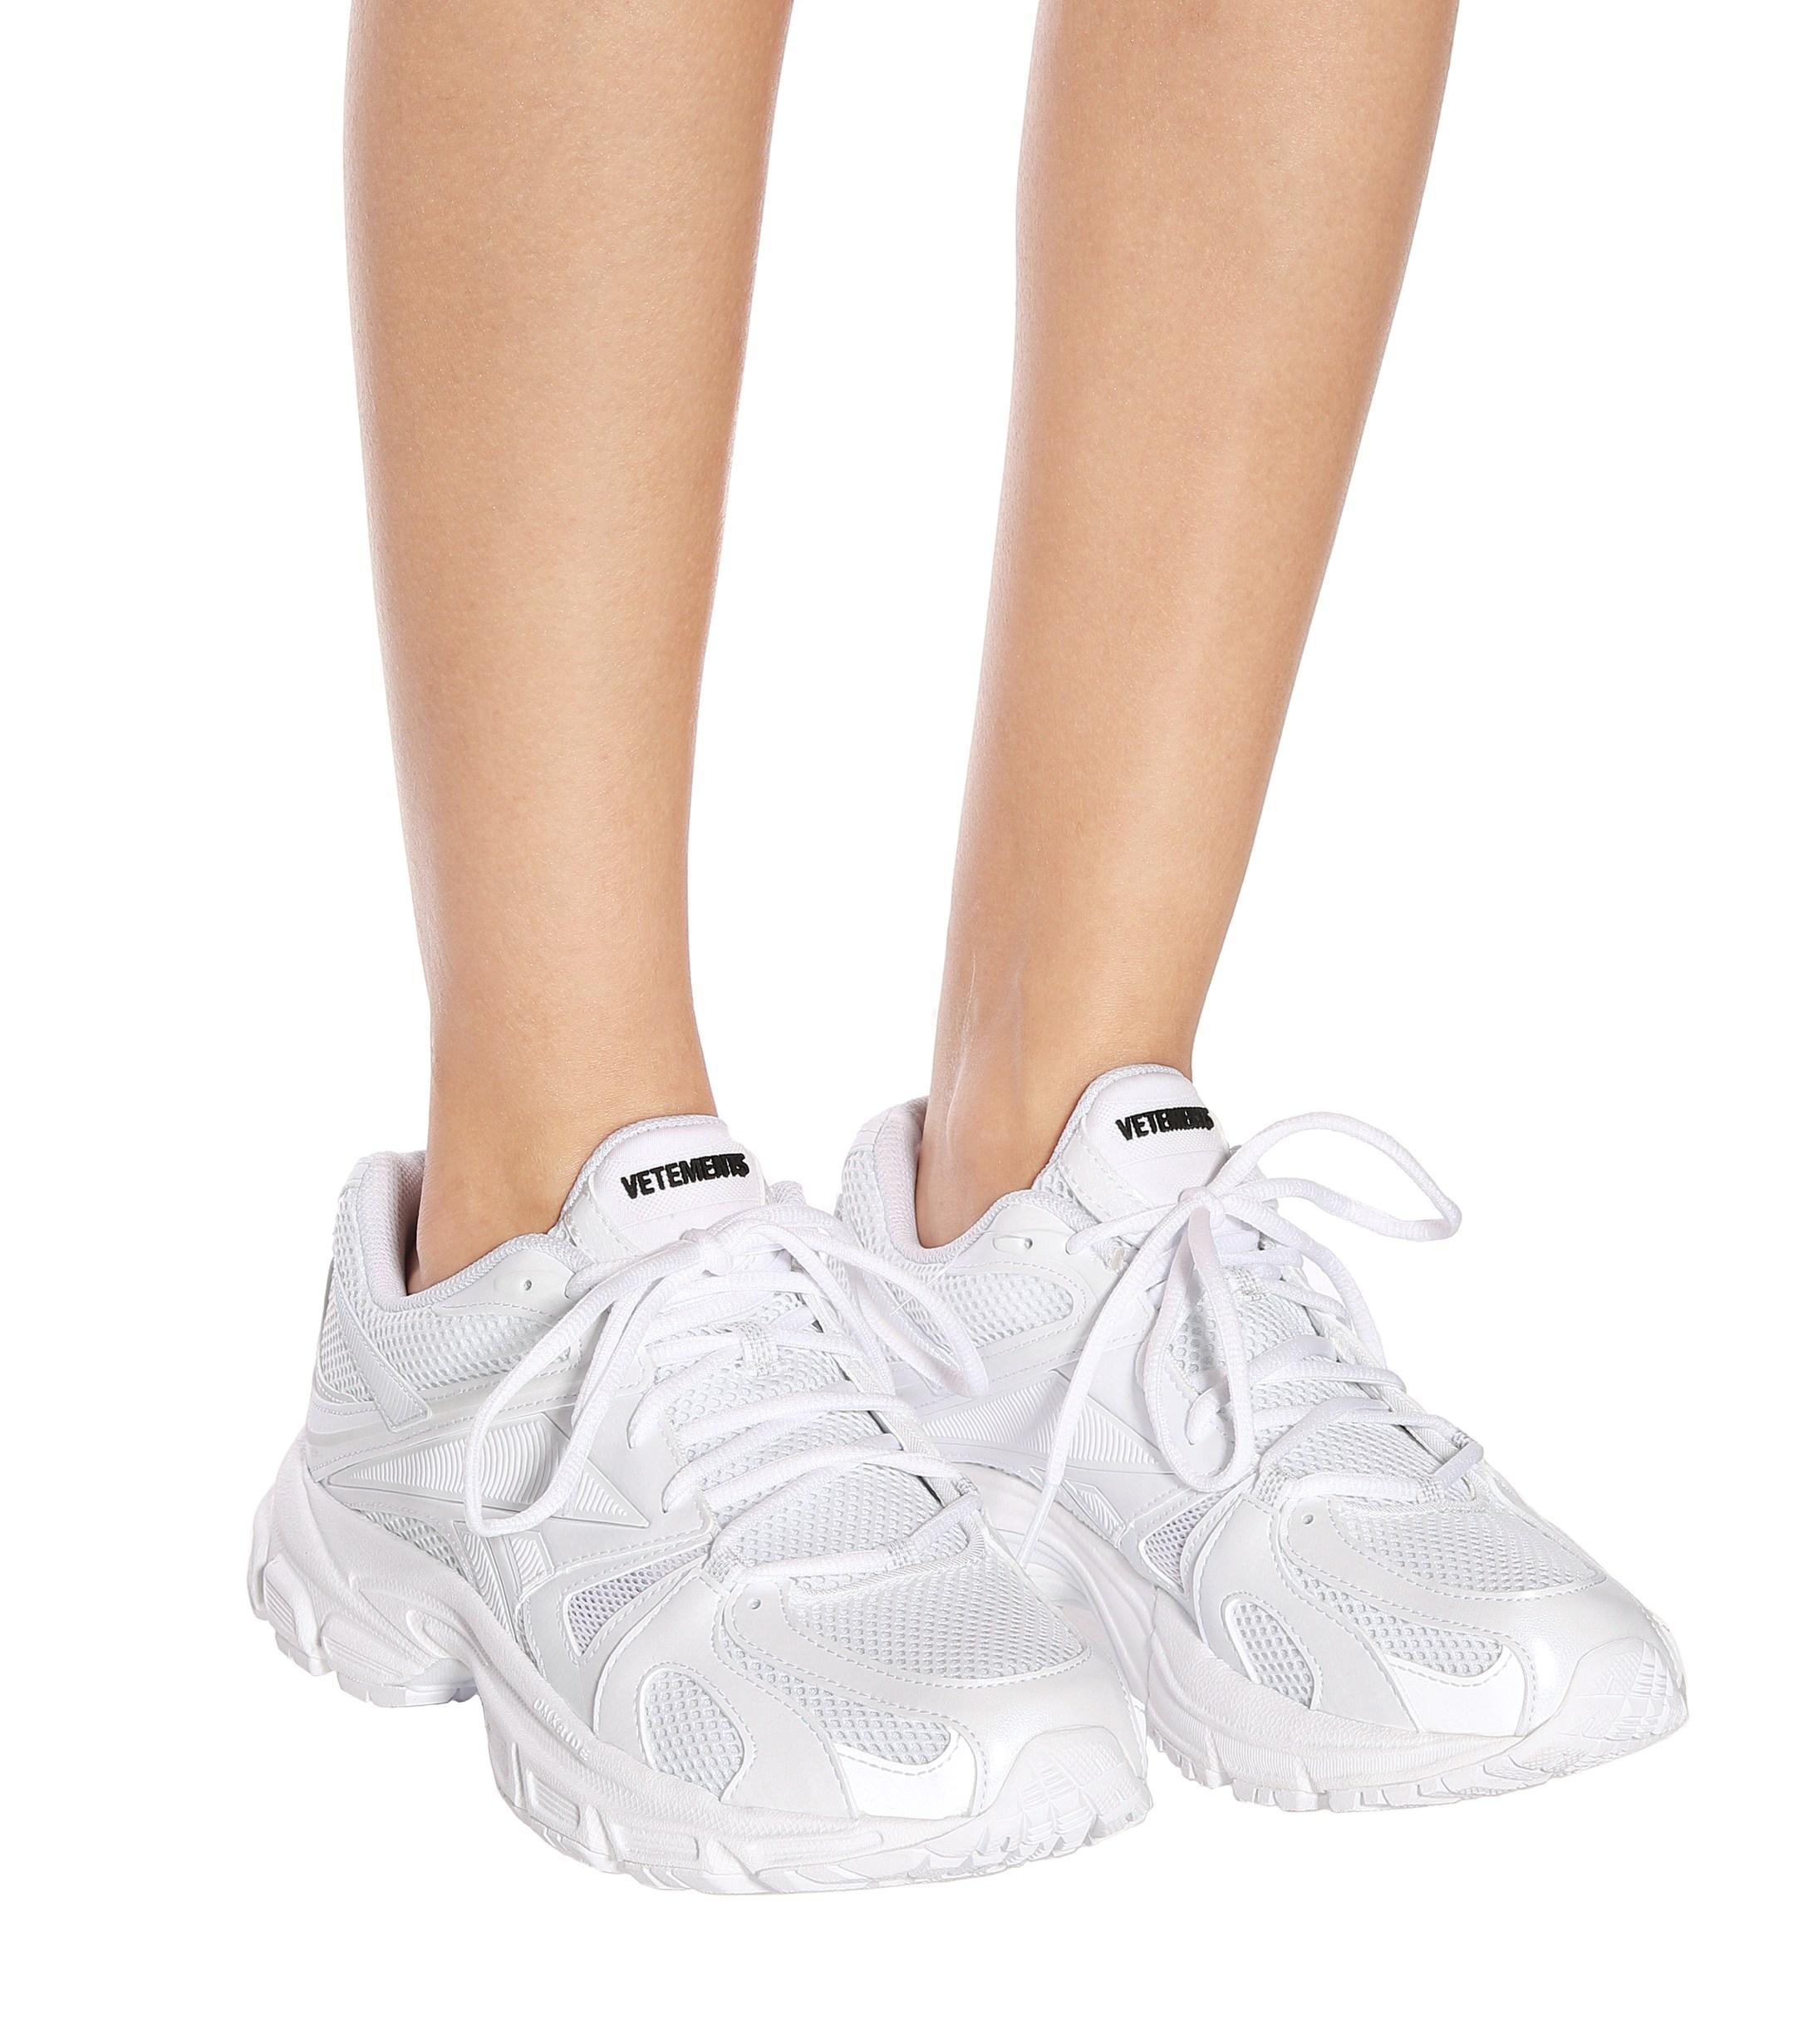 Vetements X Reebok Spike Runner 200 Sneakers in White | Lyst